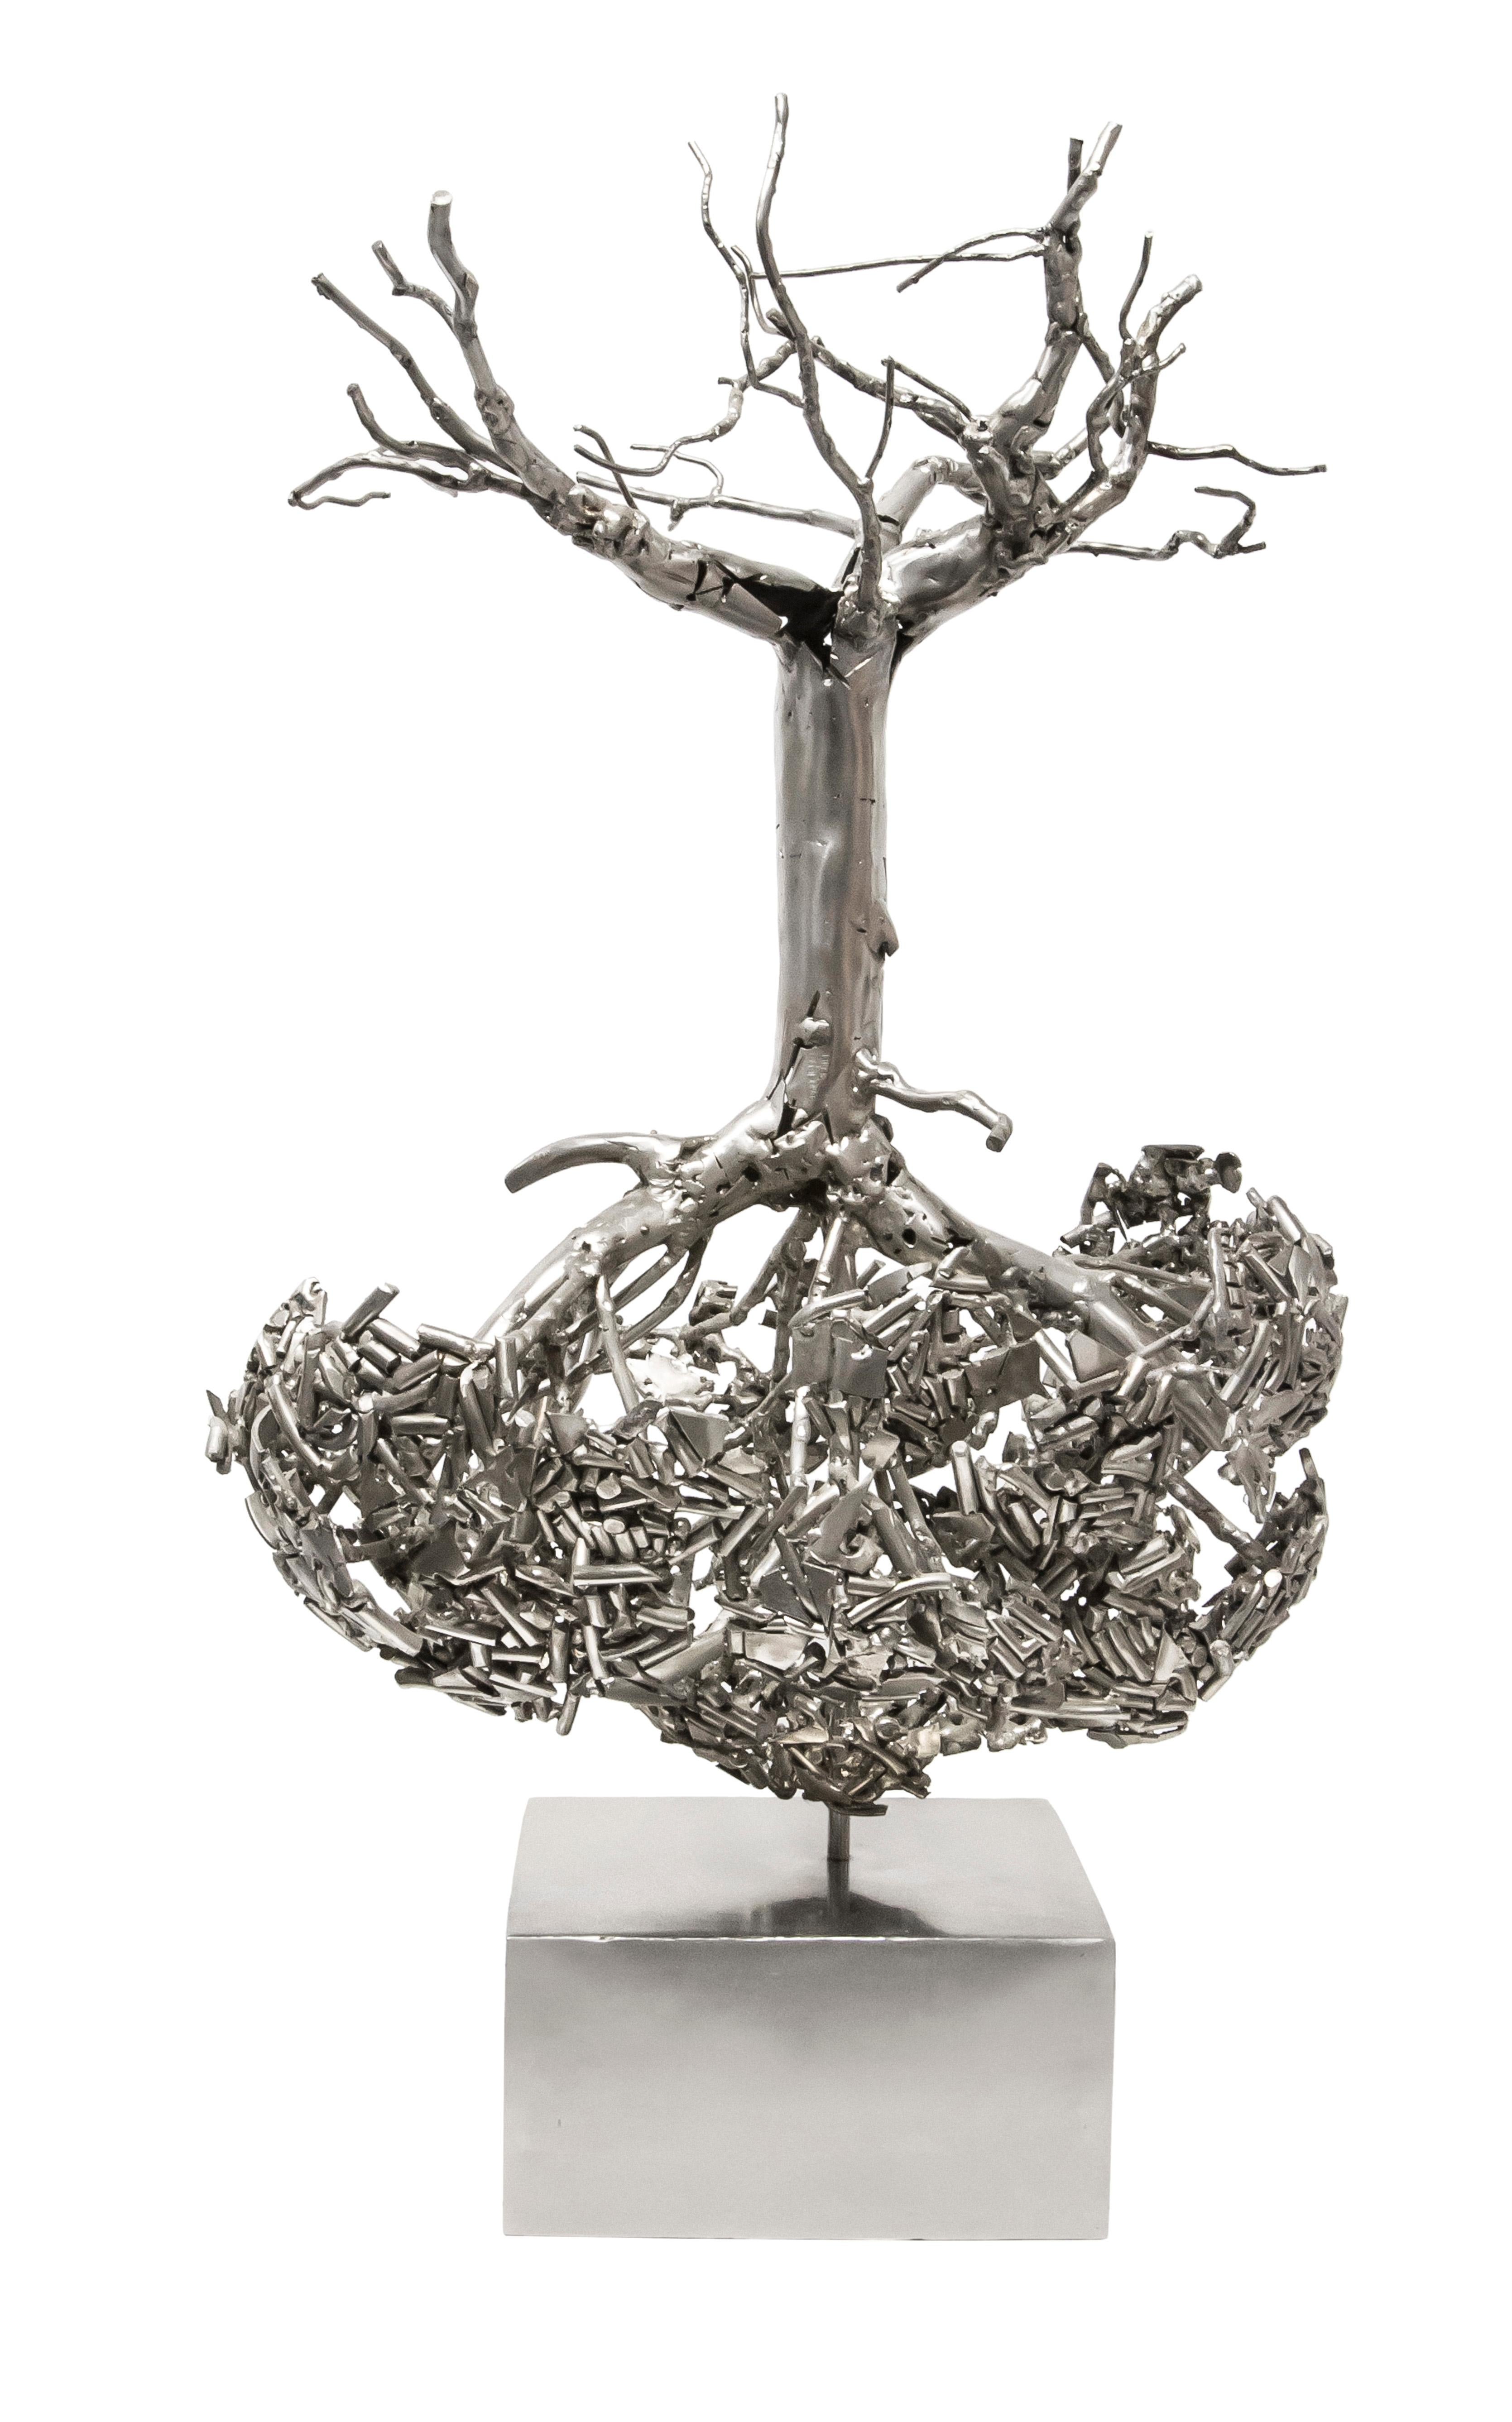 Árbol Invertido - 21st Century, Contemporary, Figurative Sculpture, Steel, Tree